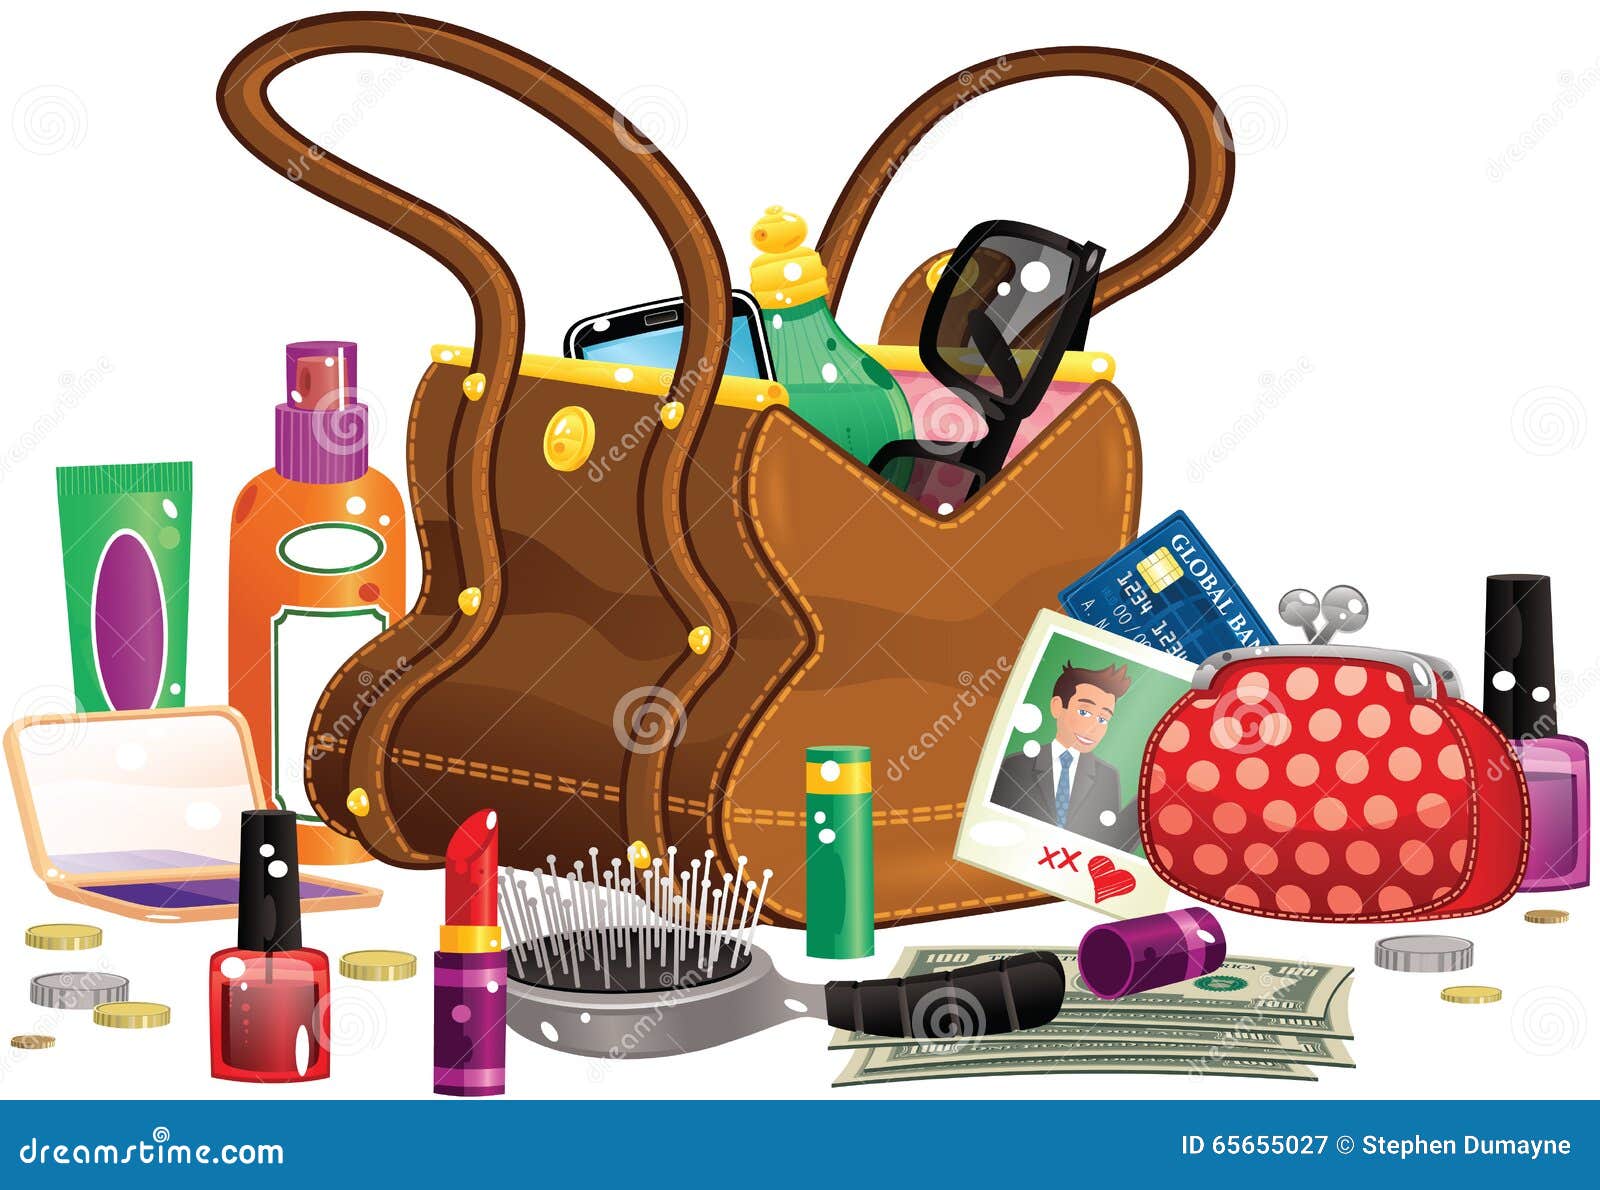 womans handbag and contents